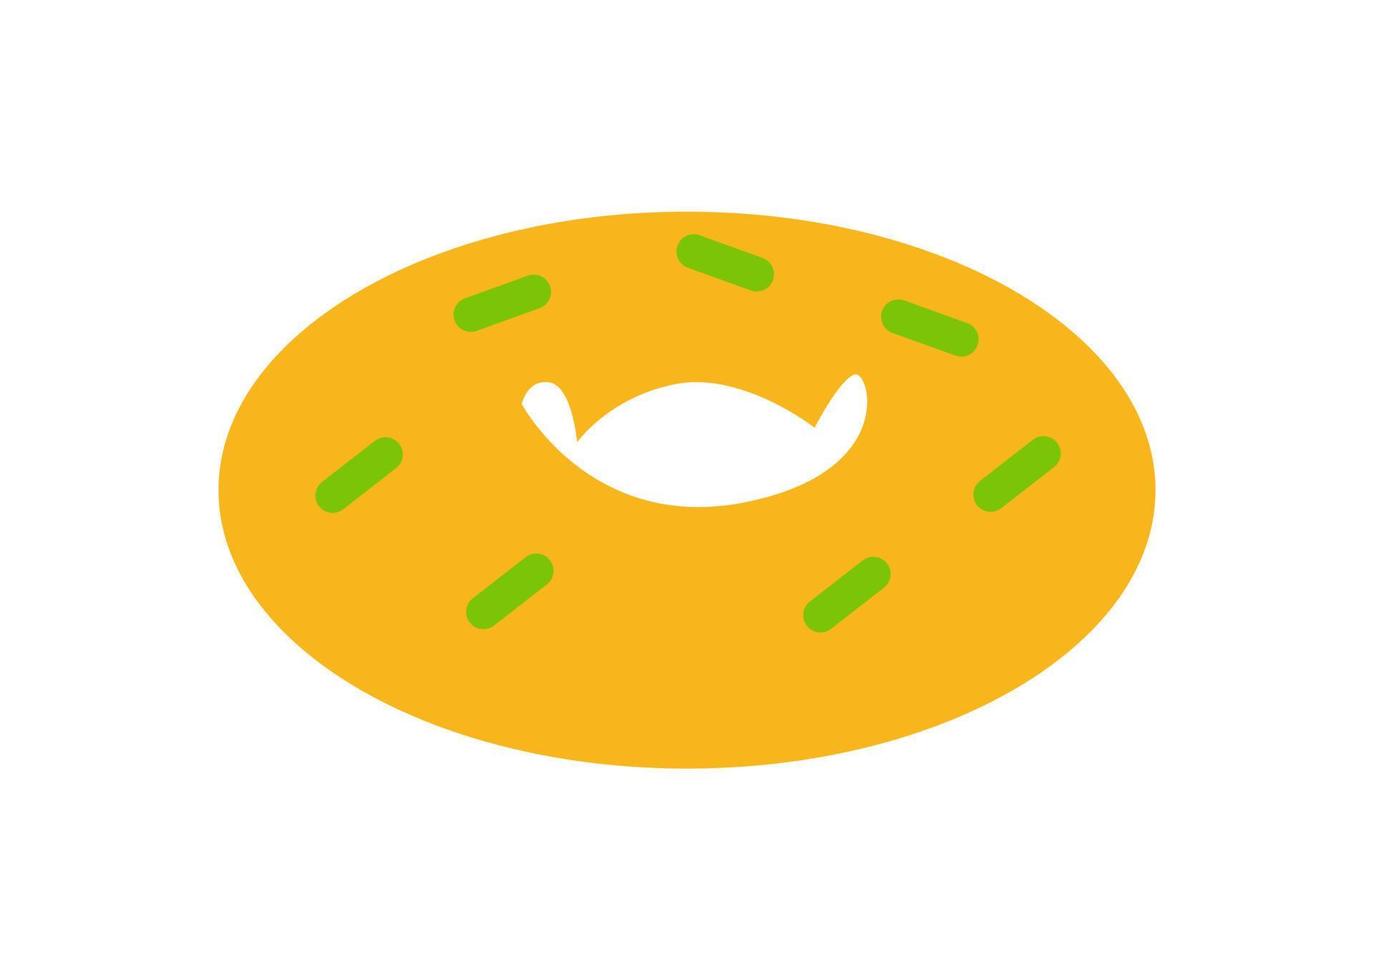 donut shape icon or symbol design vector